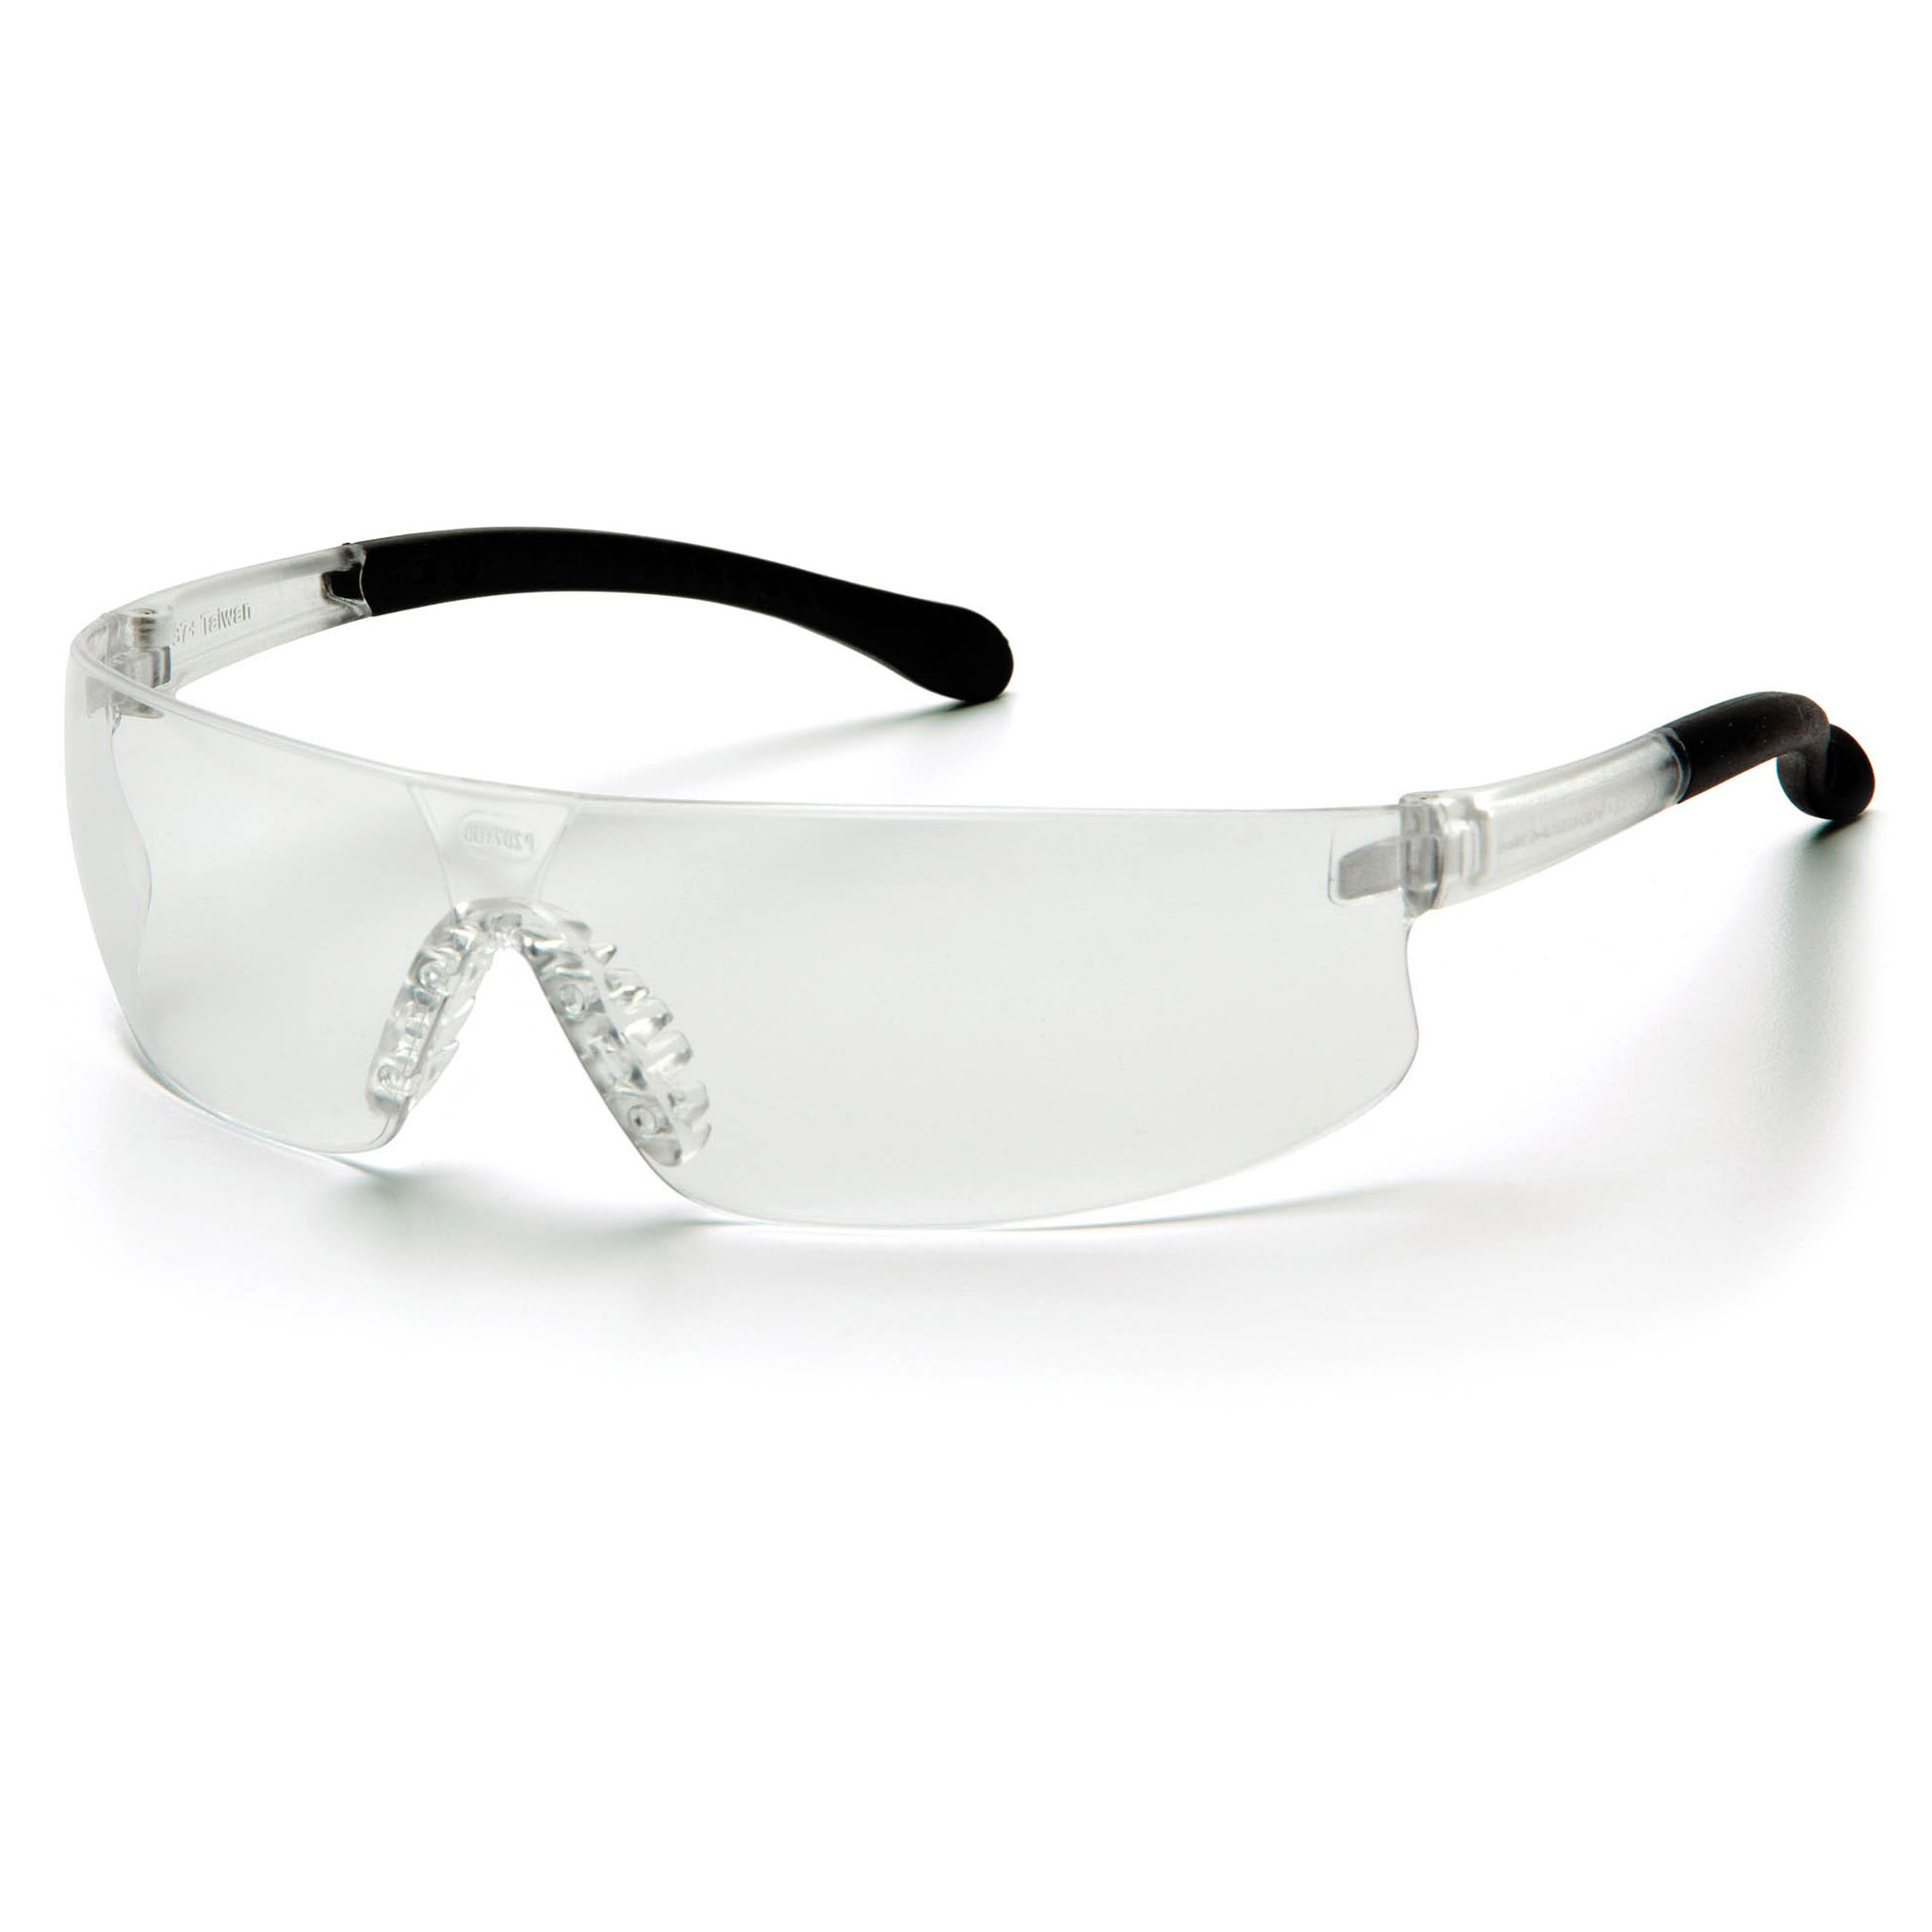 Full Source Meshweaver Safety Glasses with Blue Lens Black Temples